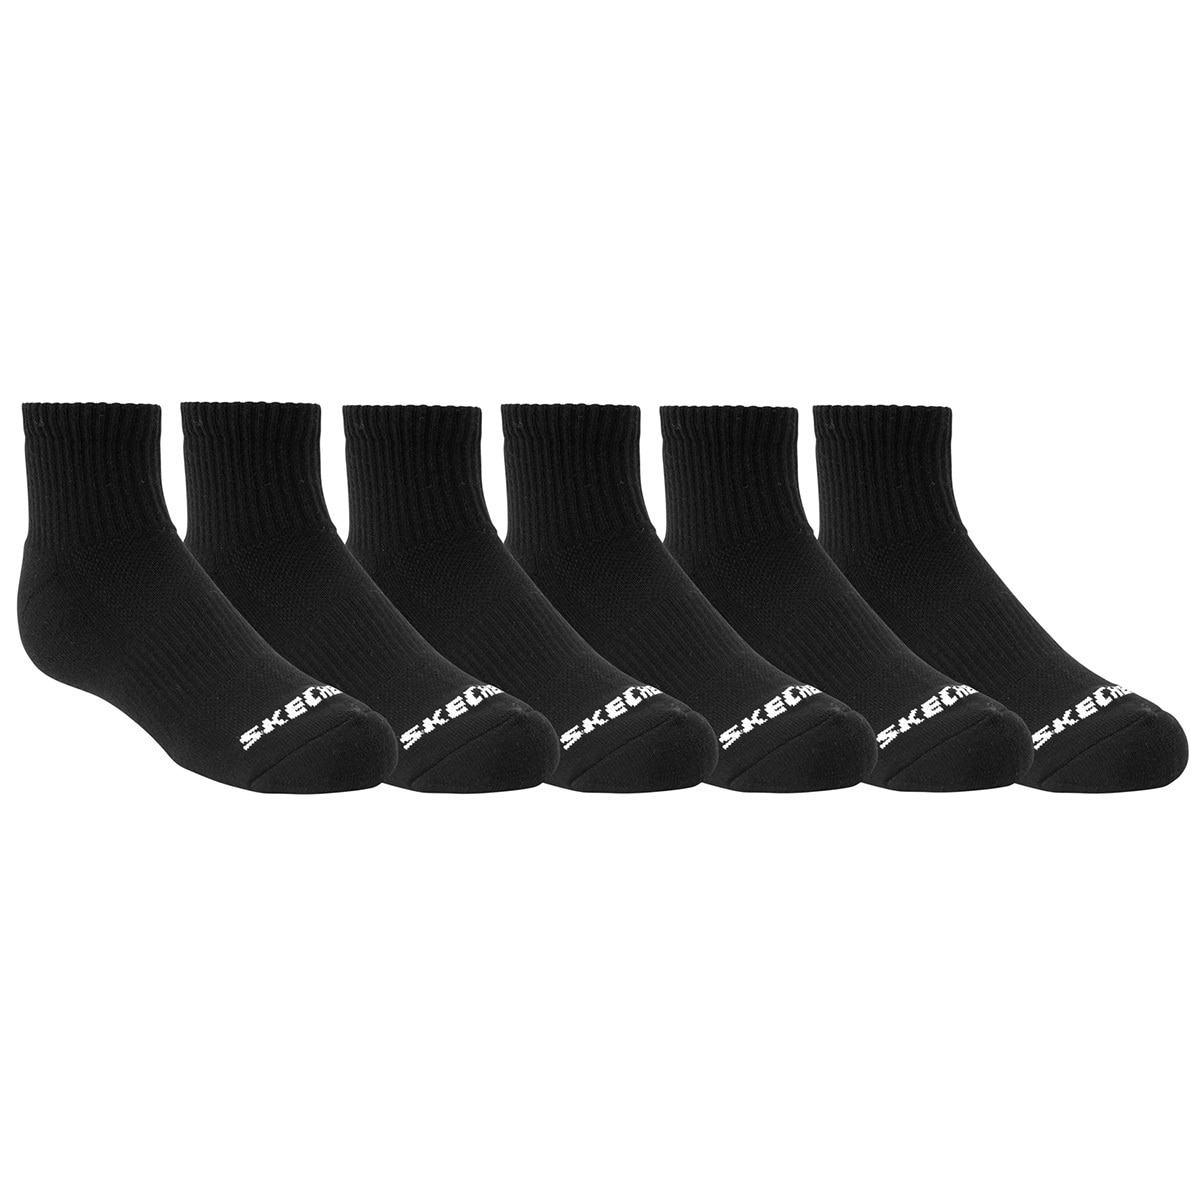 Skechers Kids' Sock 6 pack - Black